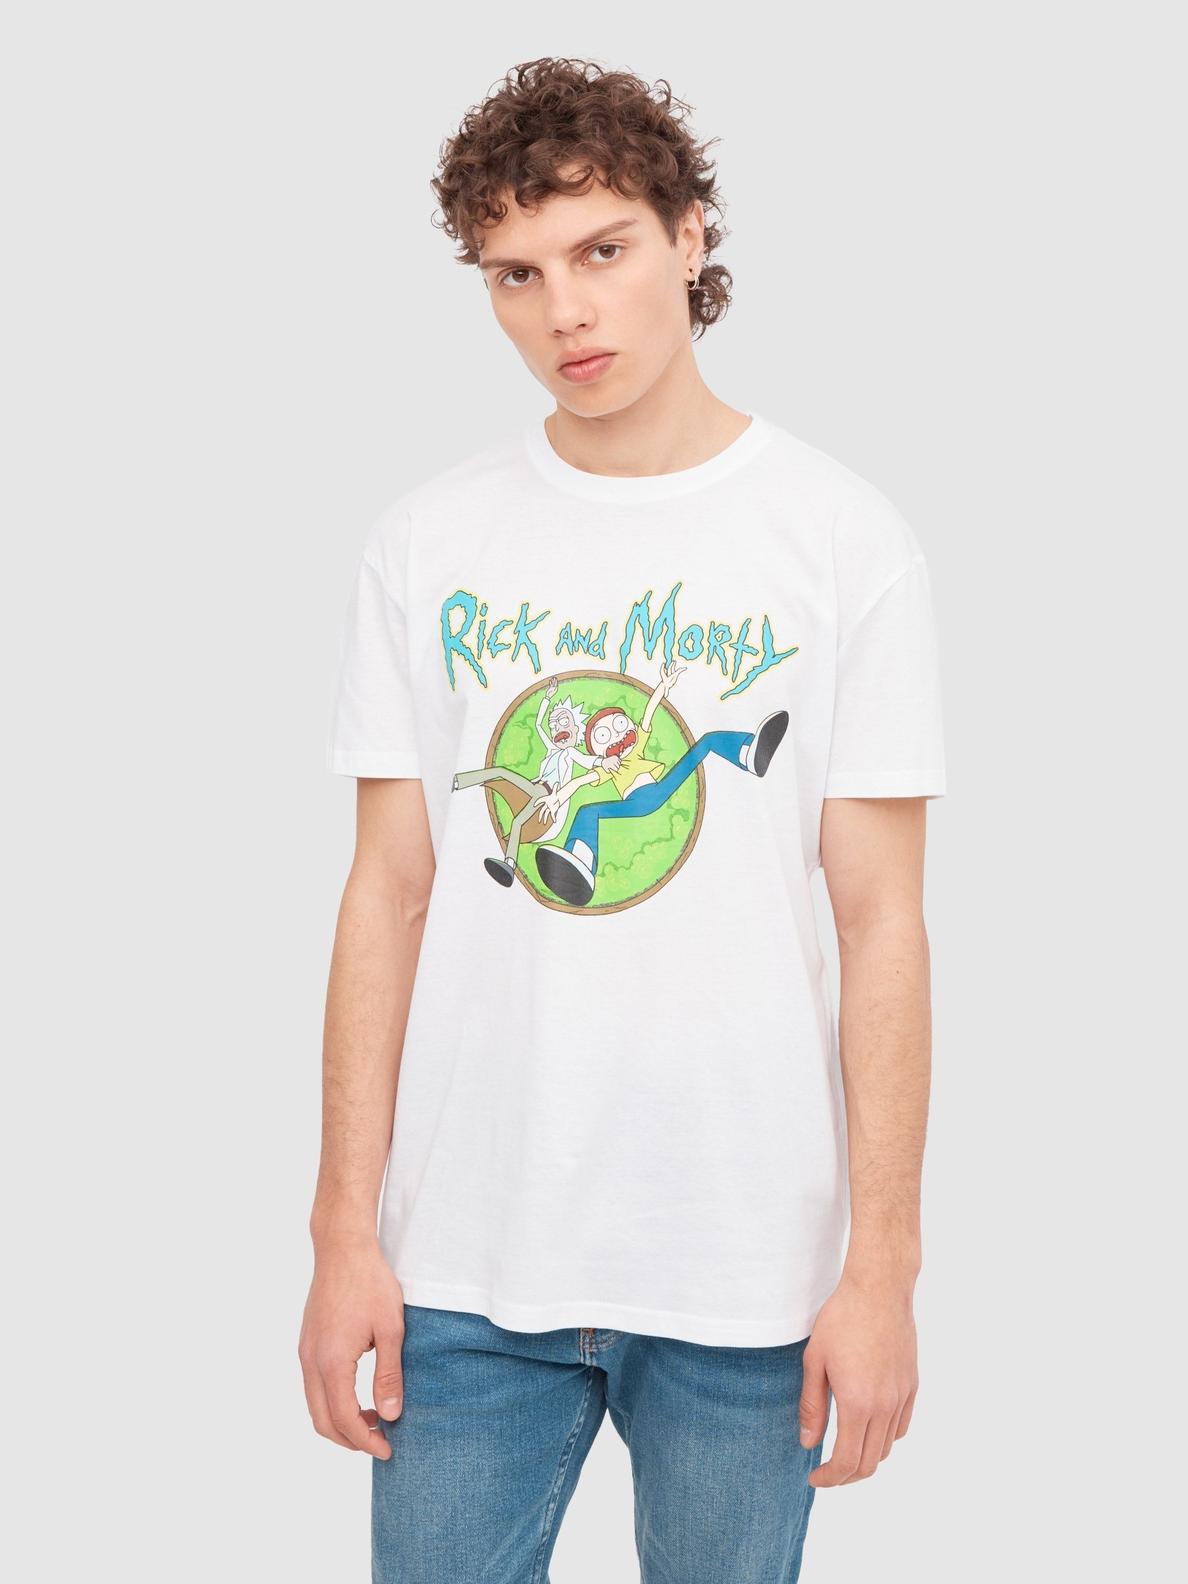 Oferta de Camiseta Rick and Morty por 4,99€ en Inside